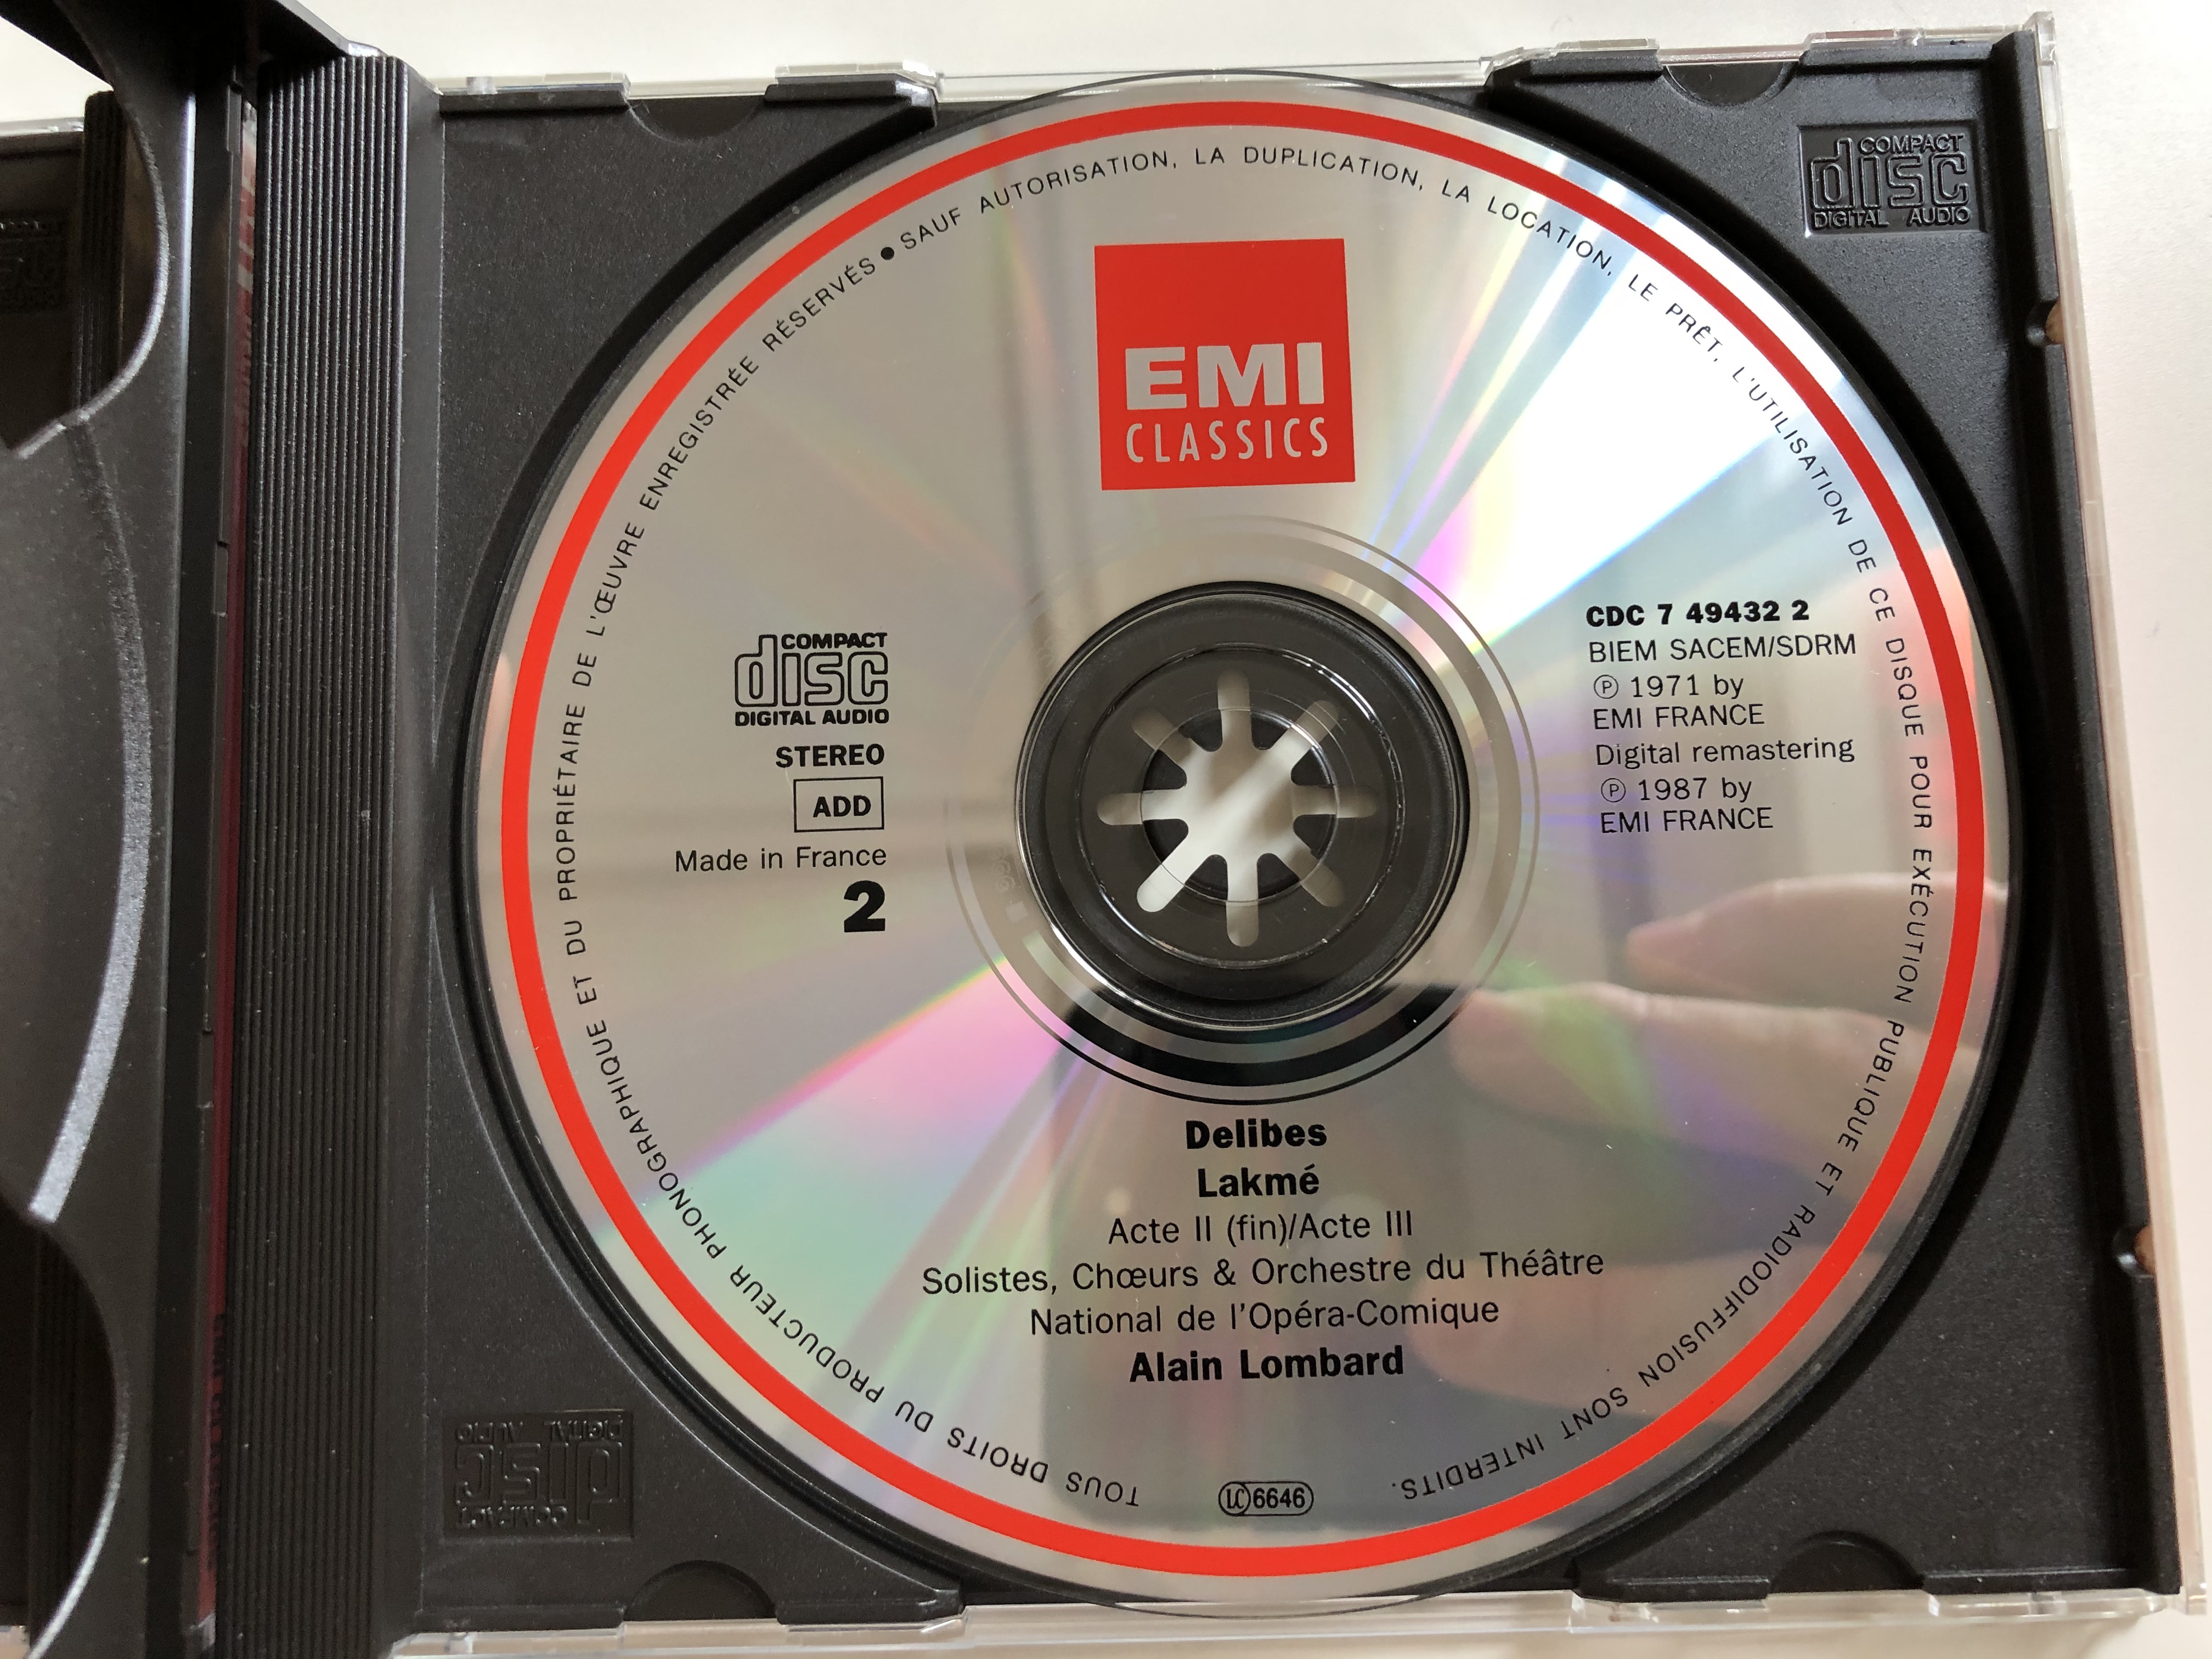 lakm-mady-mespl-charles-burles-roger-soyer-ch-urs-orchestre-du-th-tre-national-de-l-op-ra-comique-alain-lombard-emi-classics-2x-audio-cd-1987-stereo-cds-7-49430-2-5-.jpg